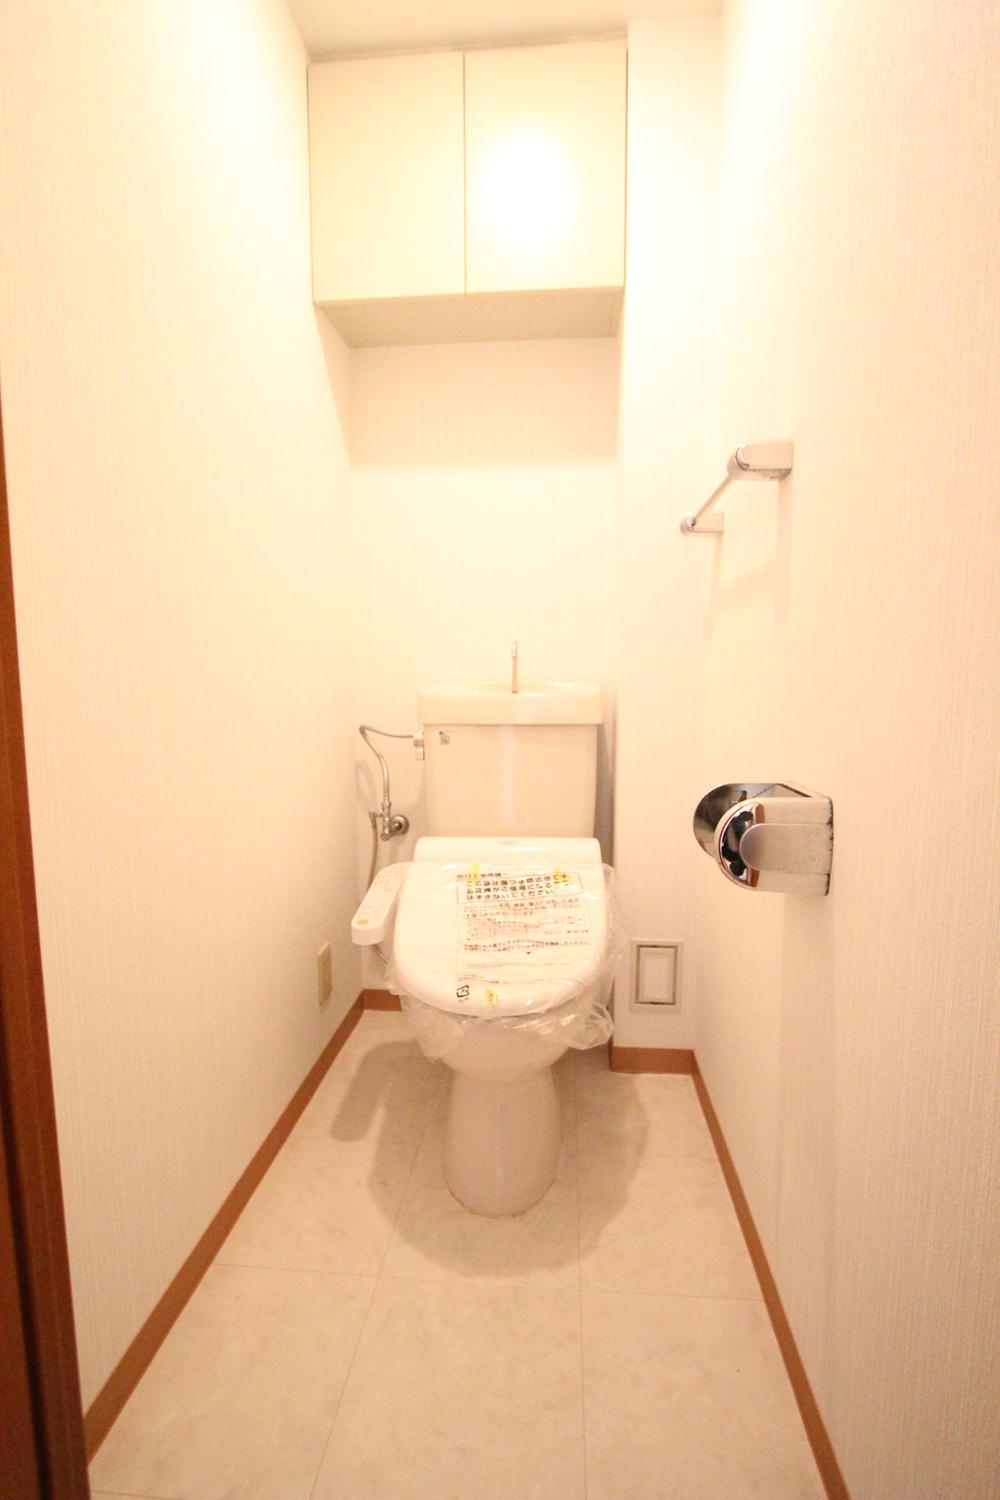 Toilet. Interior